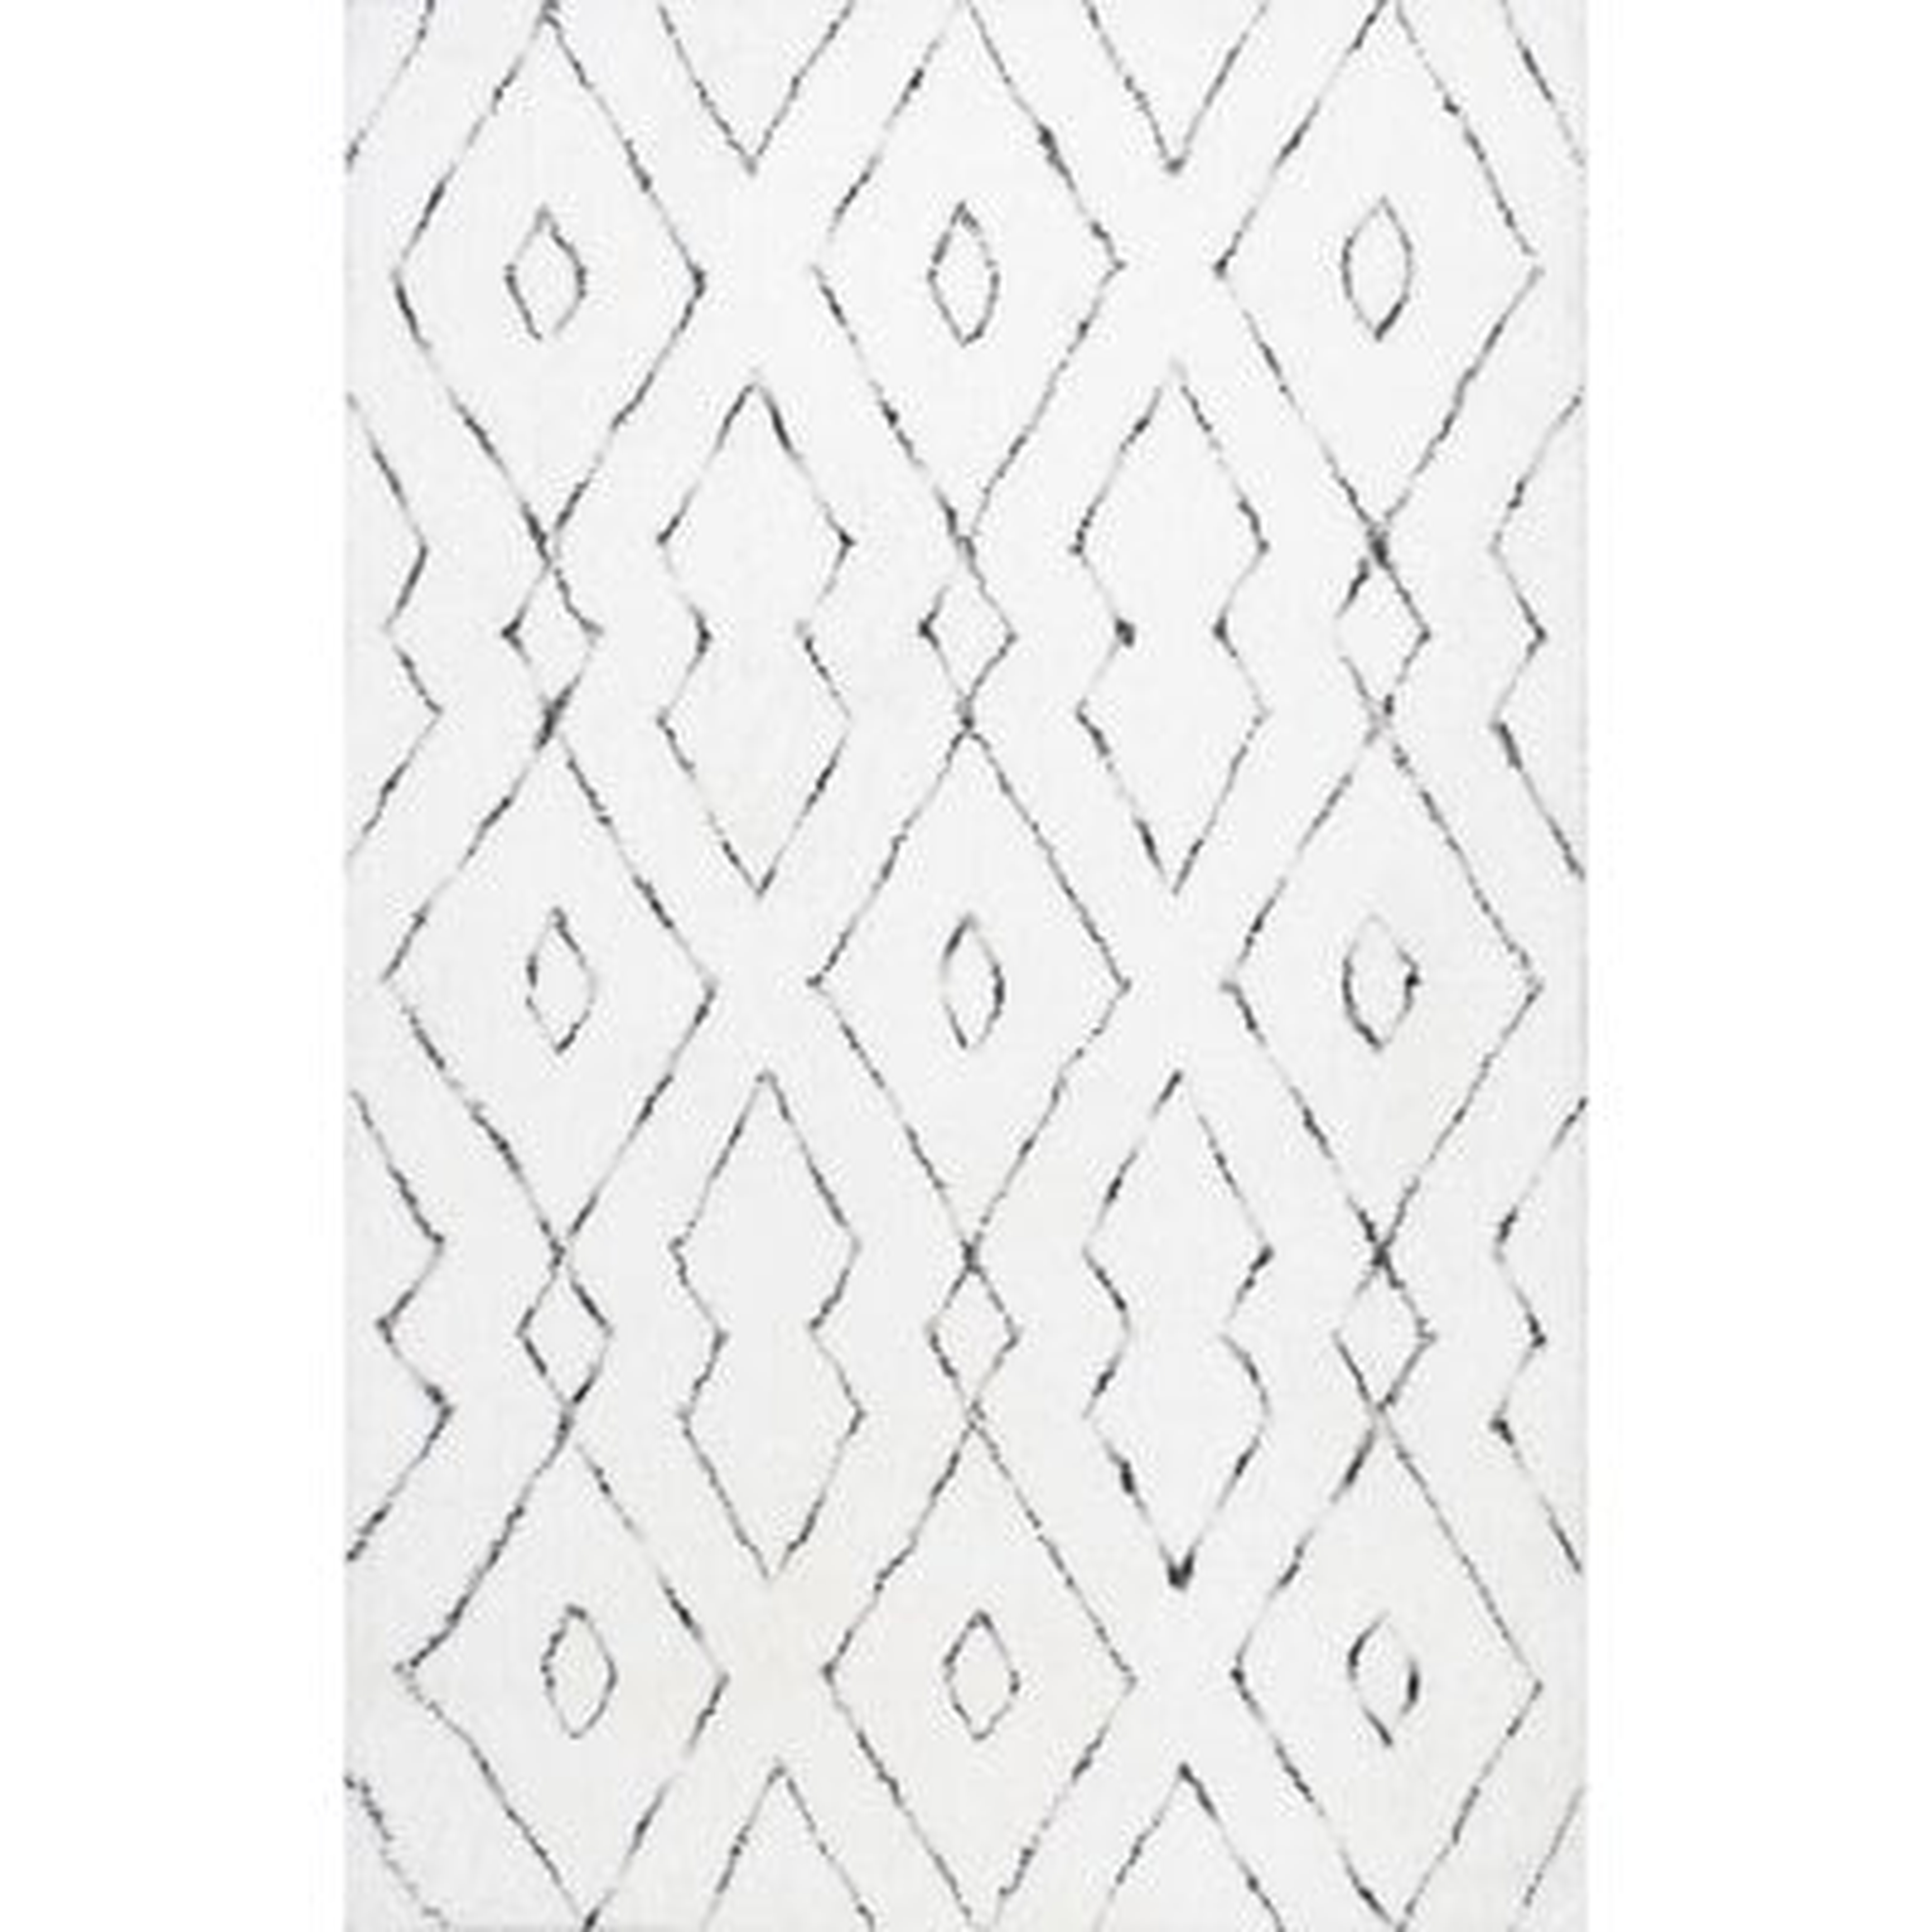 Peraza Hand-Tufted White Area Rug, 7'6" x 9'6" - Wayfair